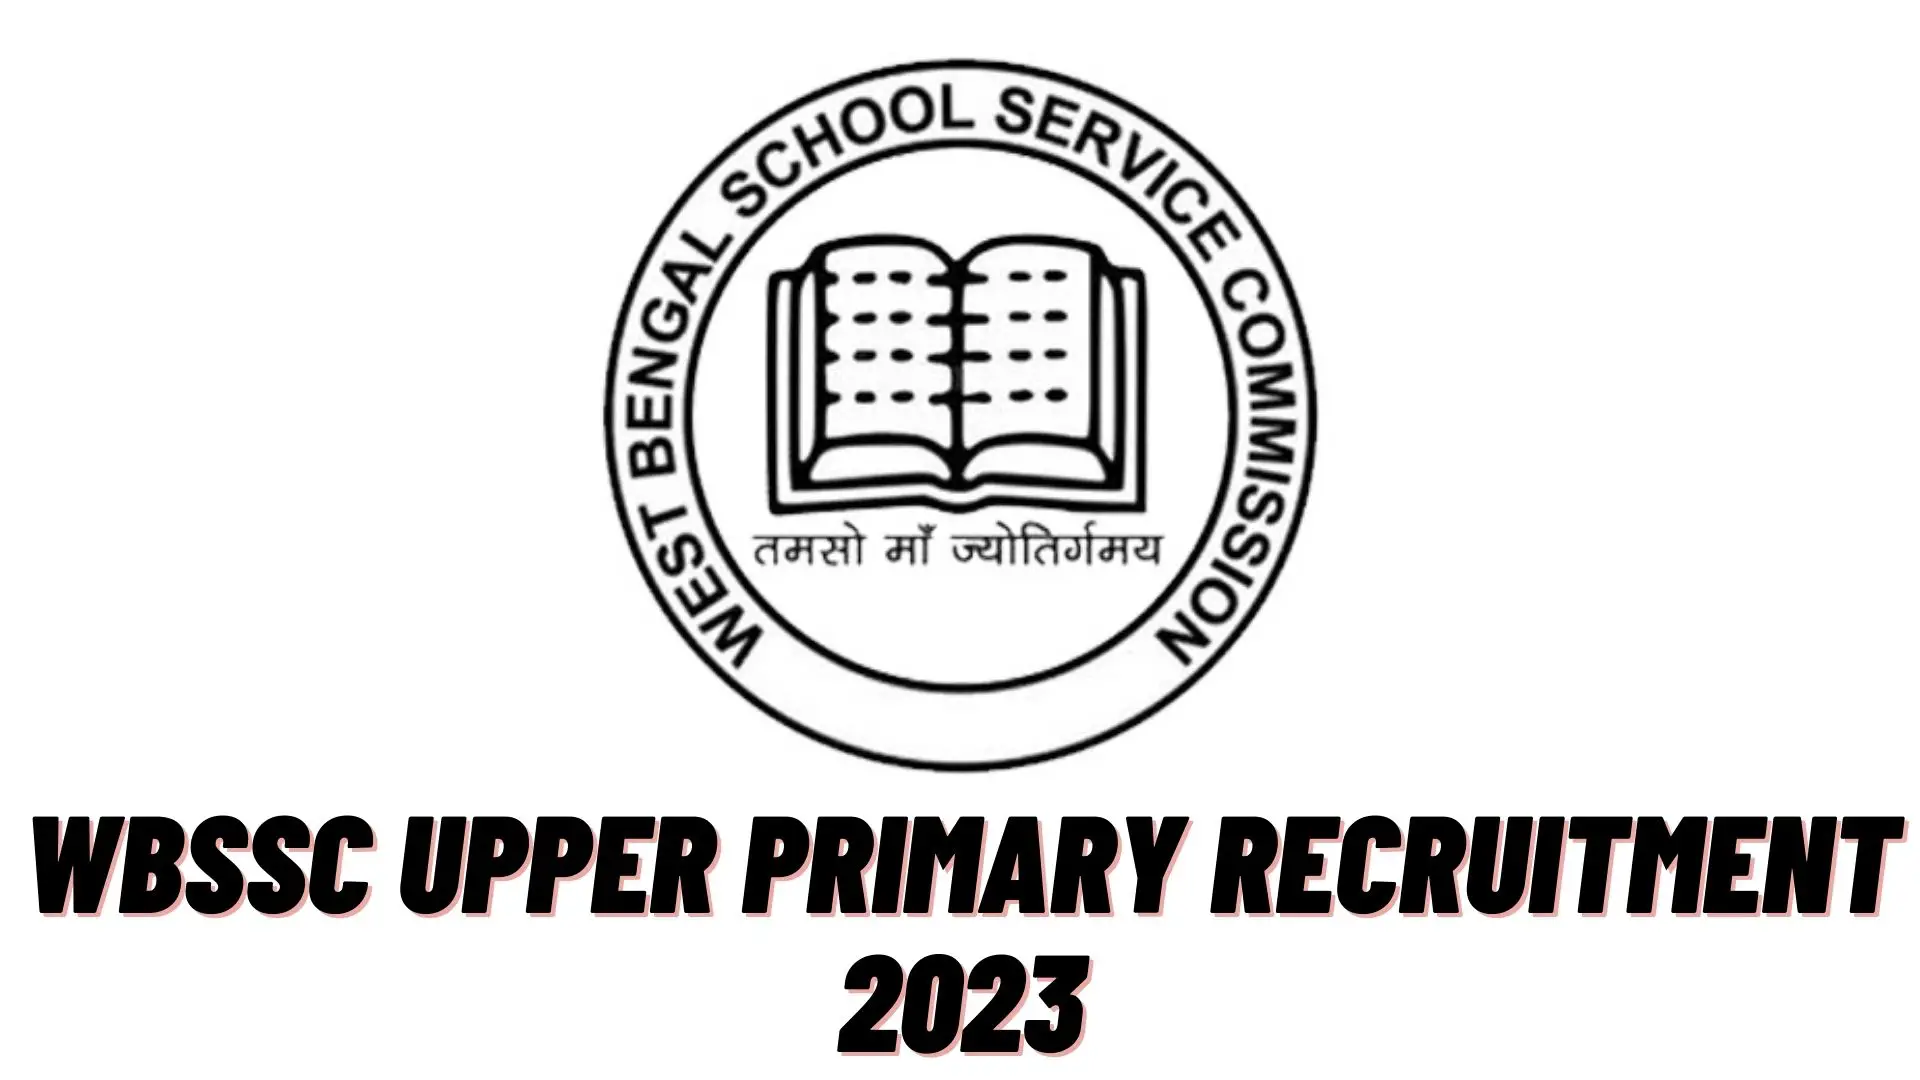 WBSSC Upper Primary Recruitment 2023